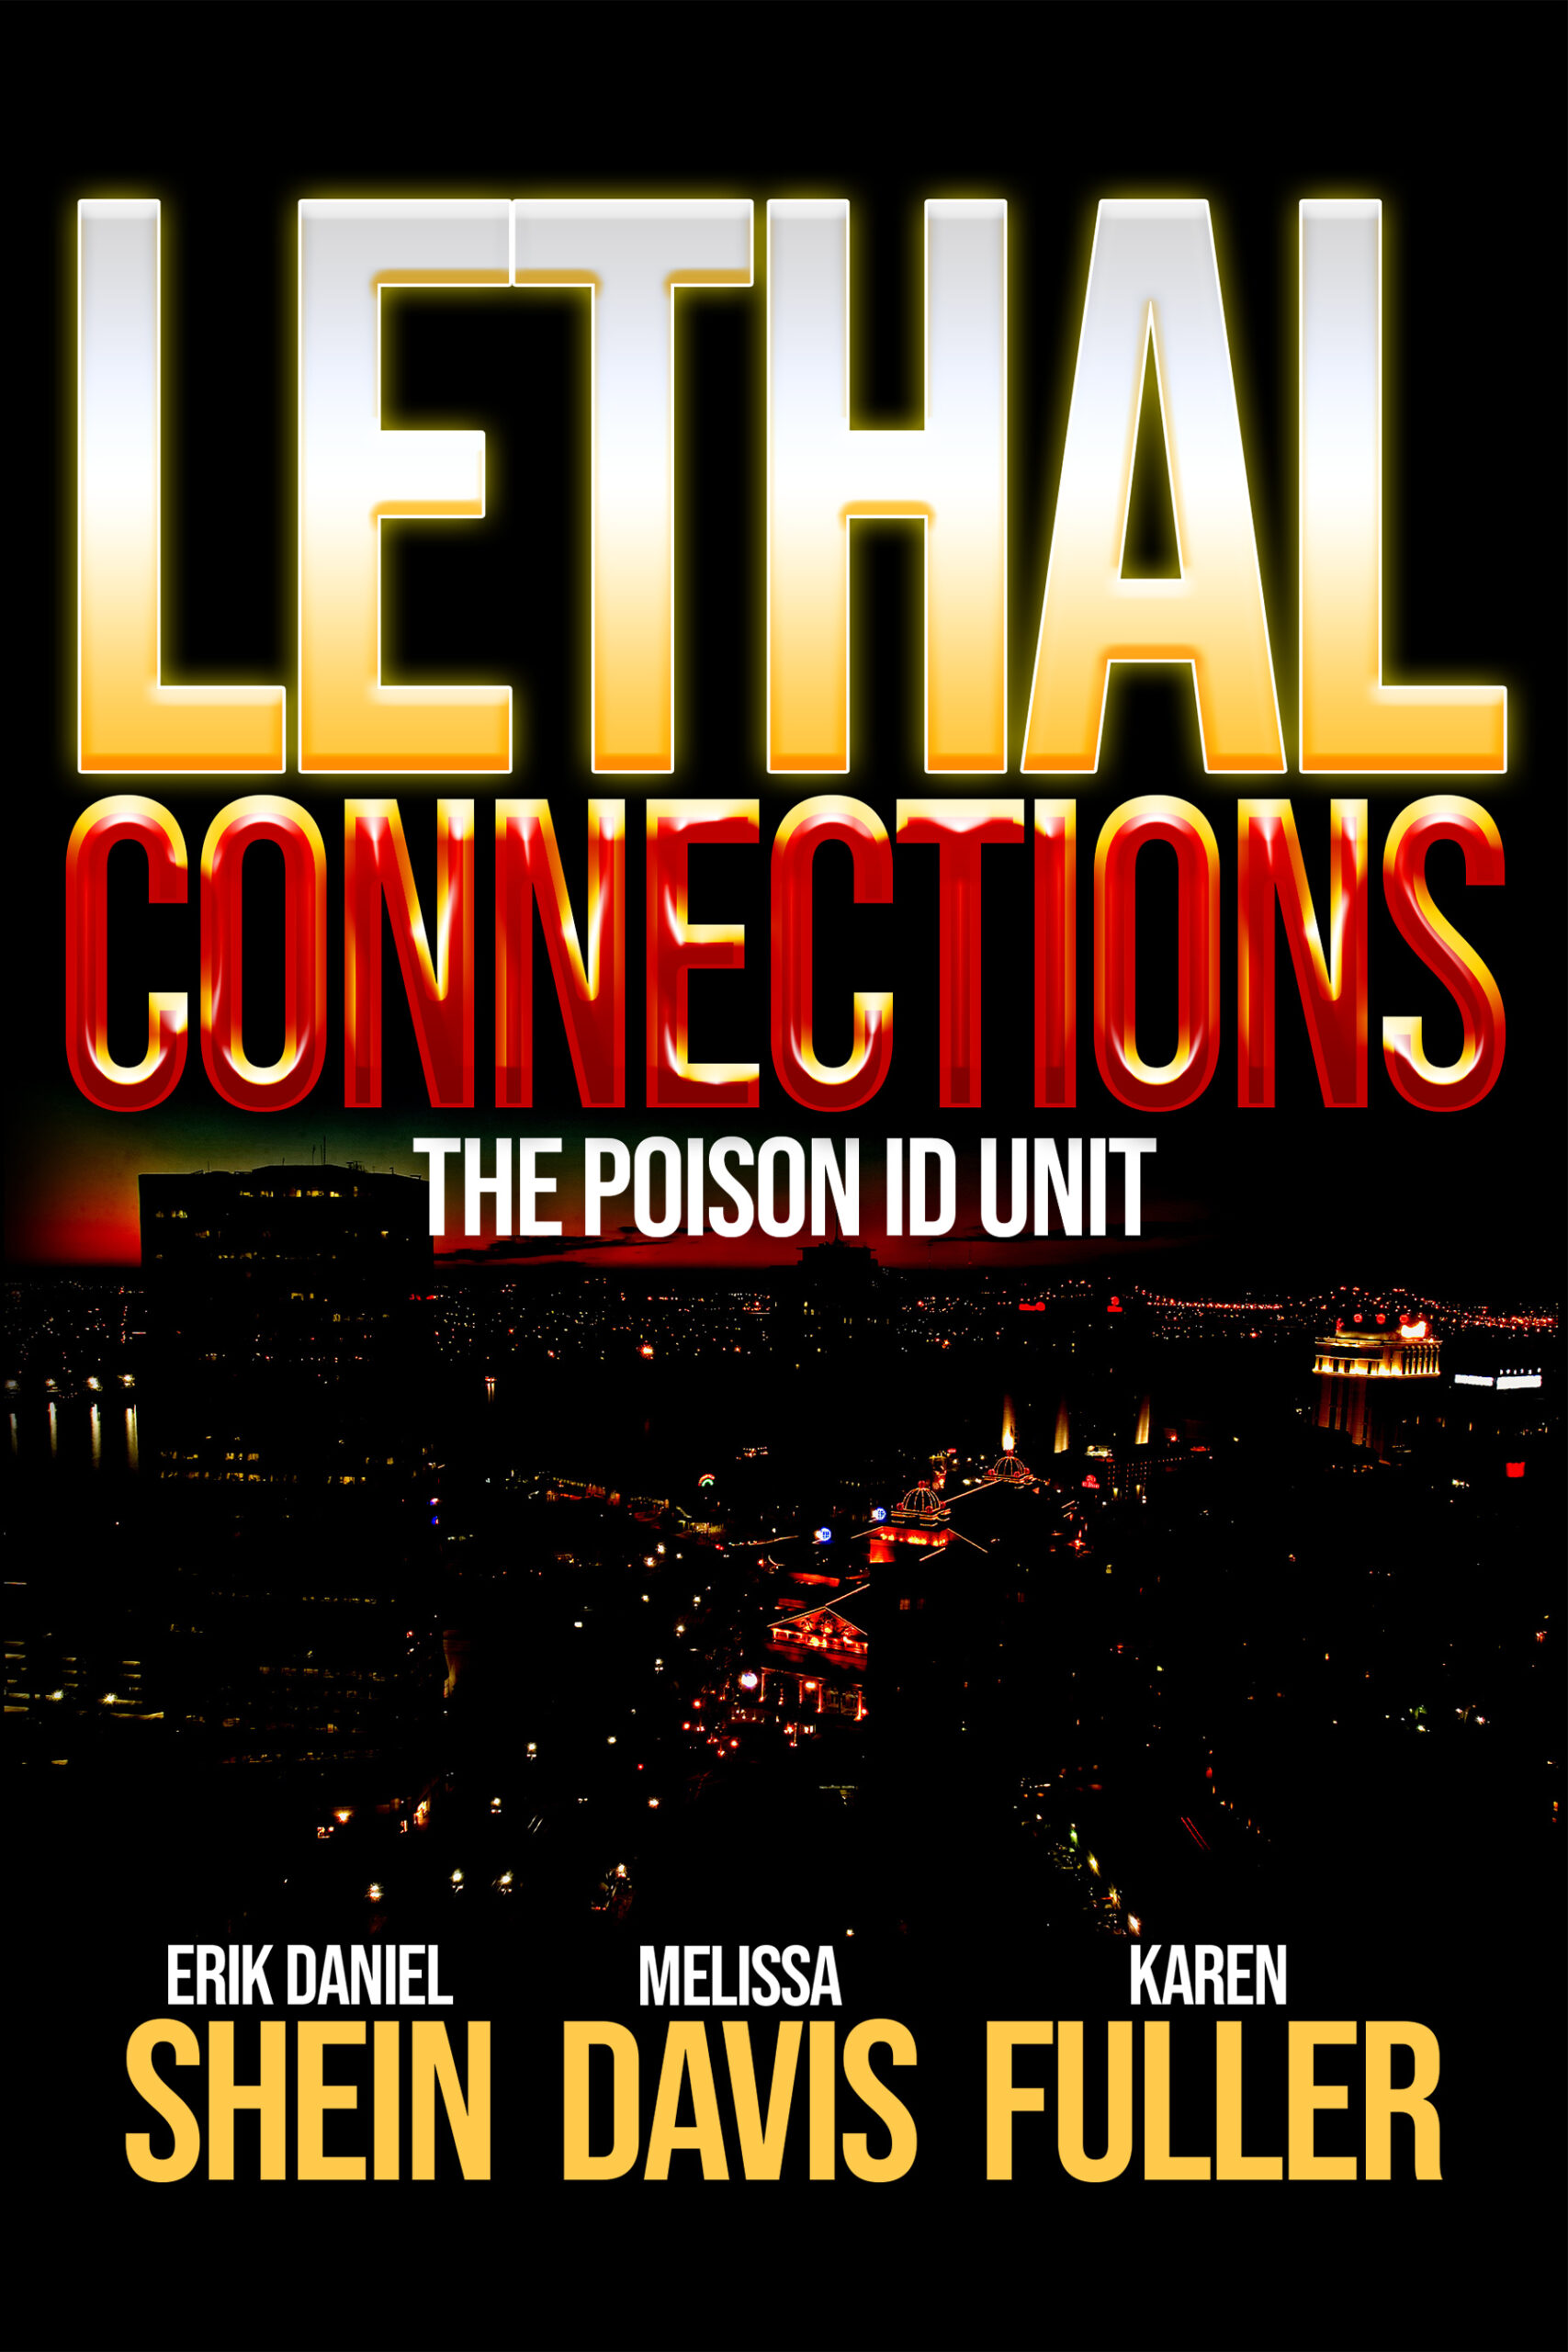 Lethal Connections: The Poison ID Unit by Karen Fuller, Melissa Davis and Erik Daniel Shein